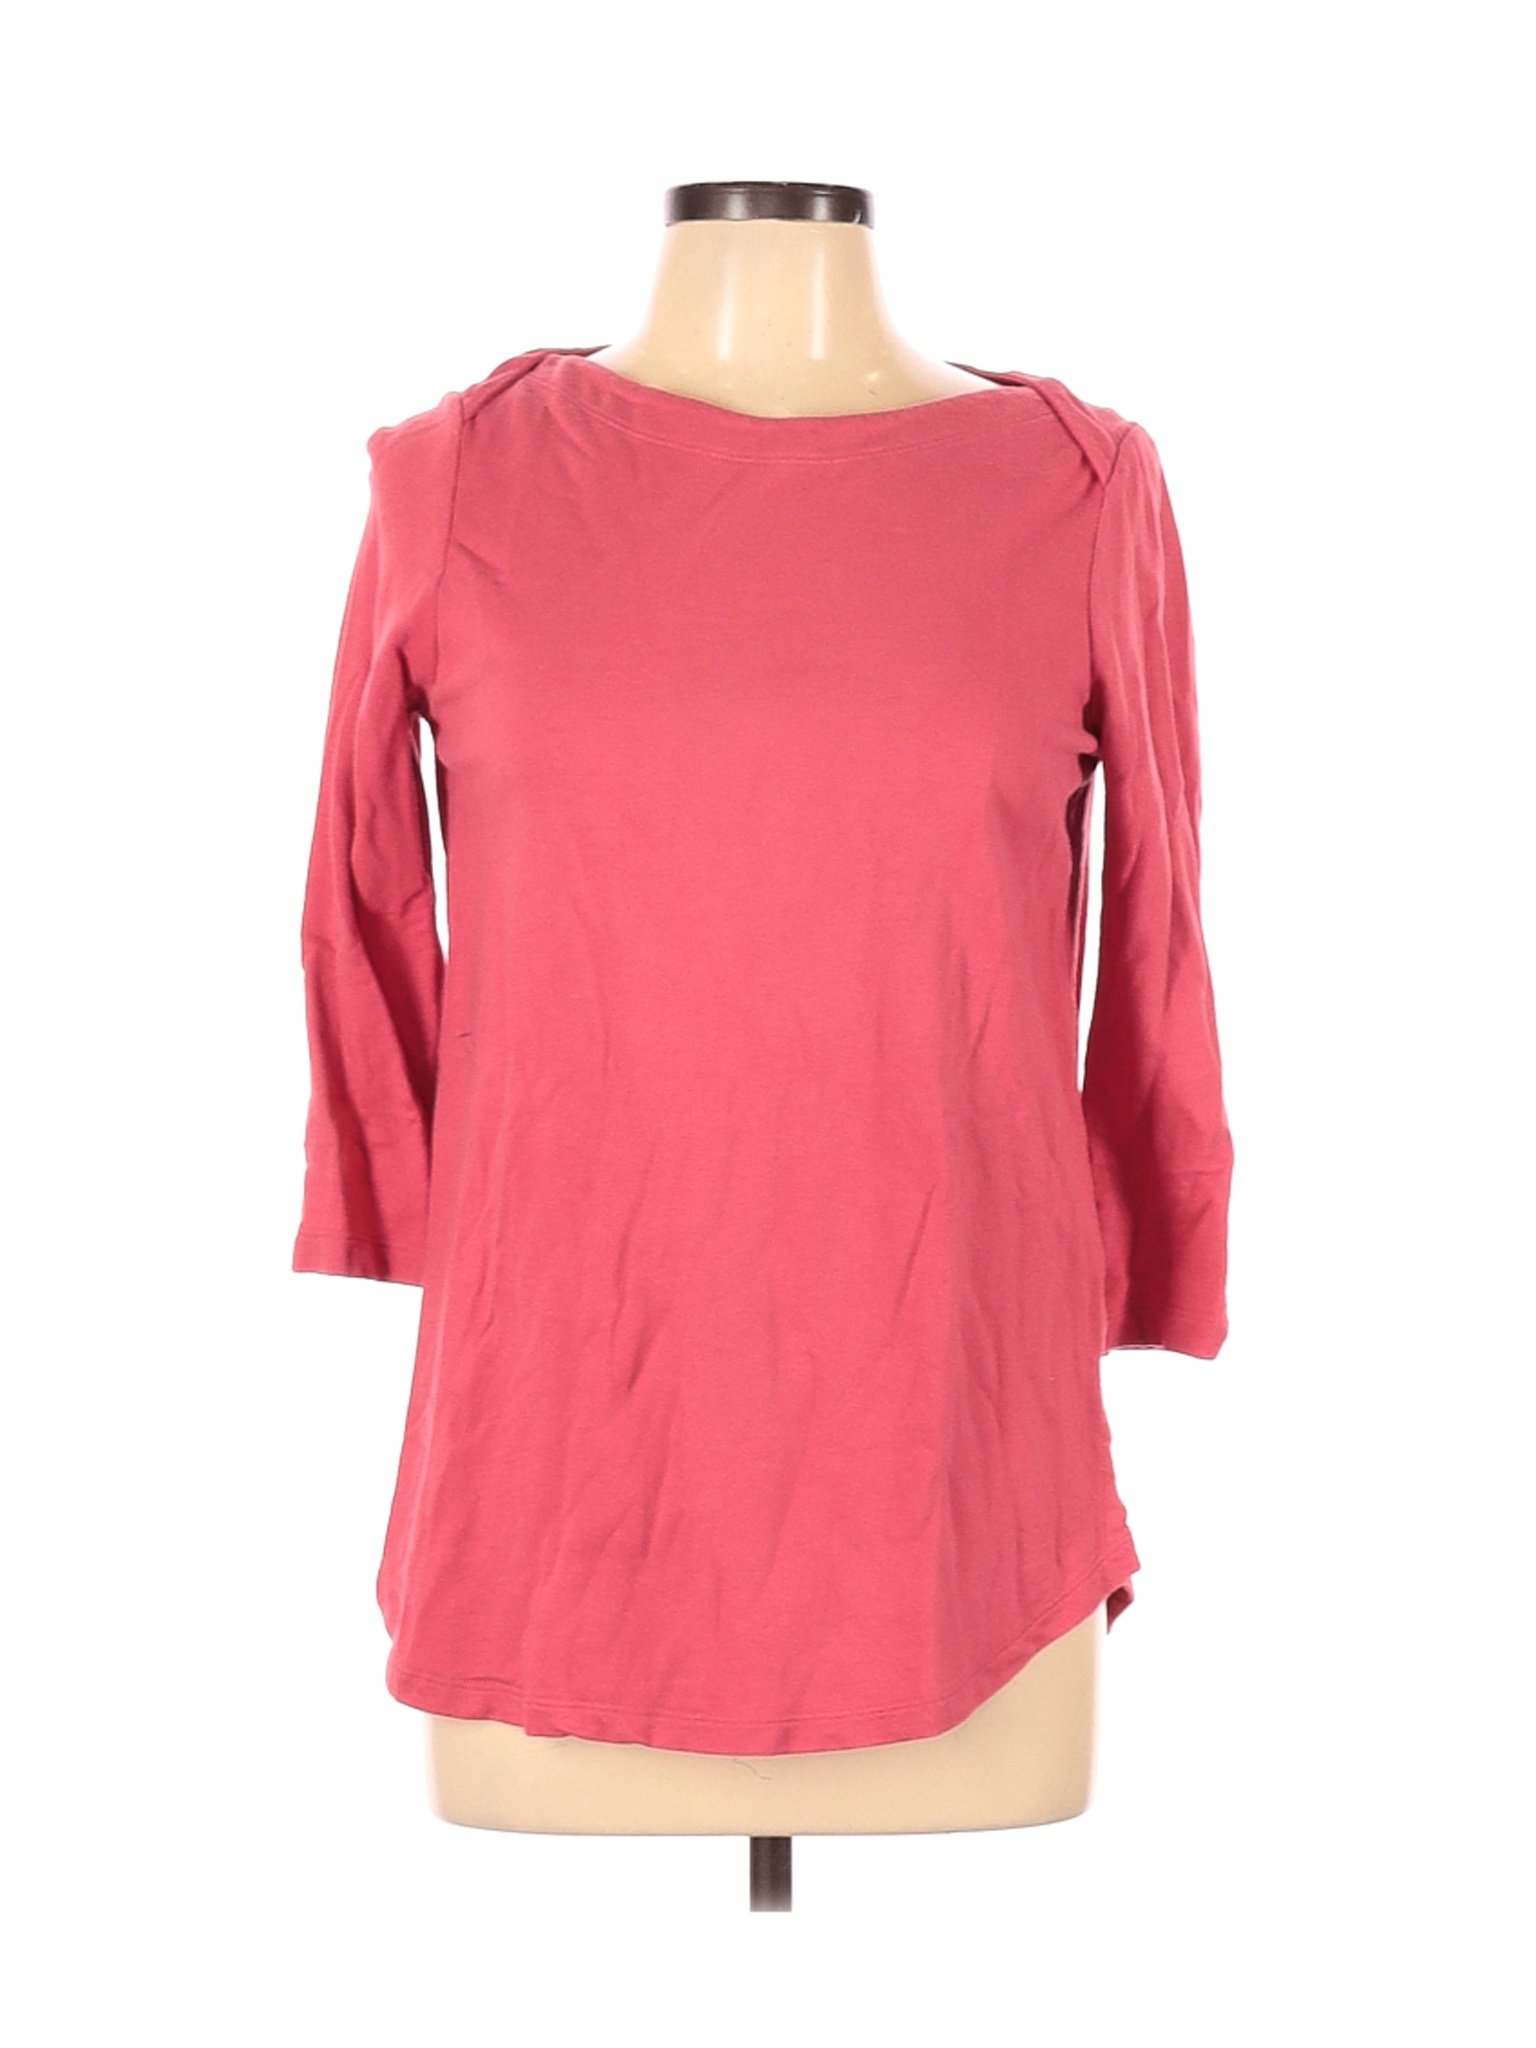 Lands' End Women Pink Sweatshirt 6 | eBay